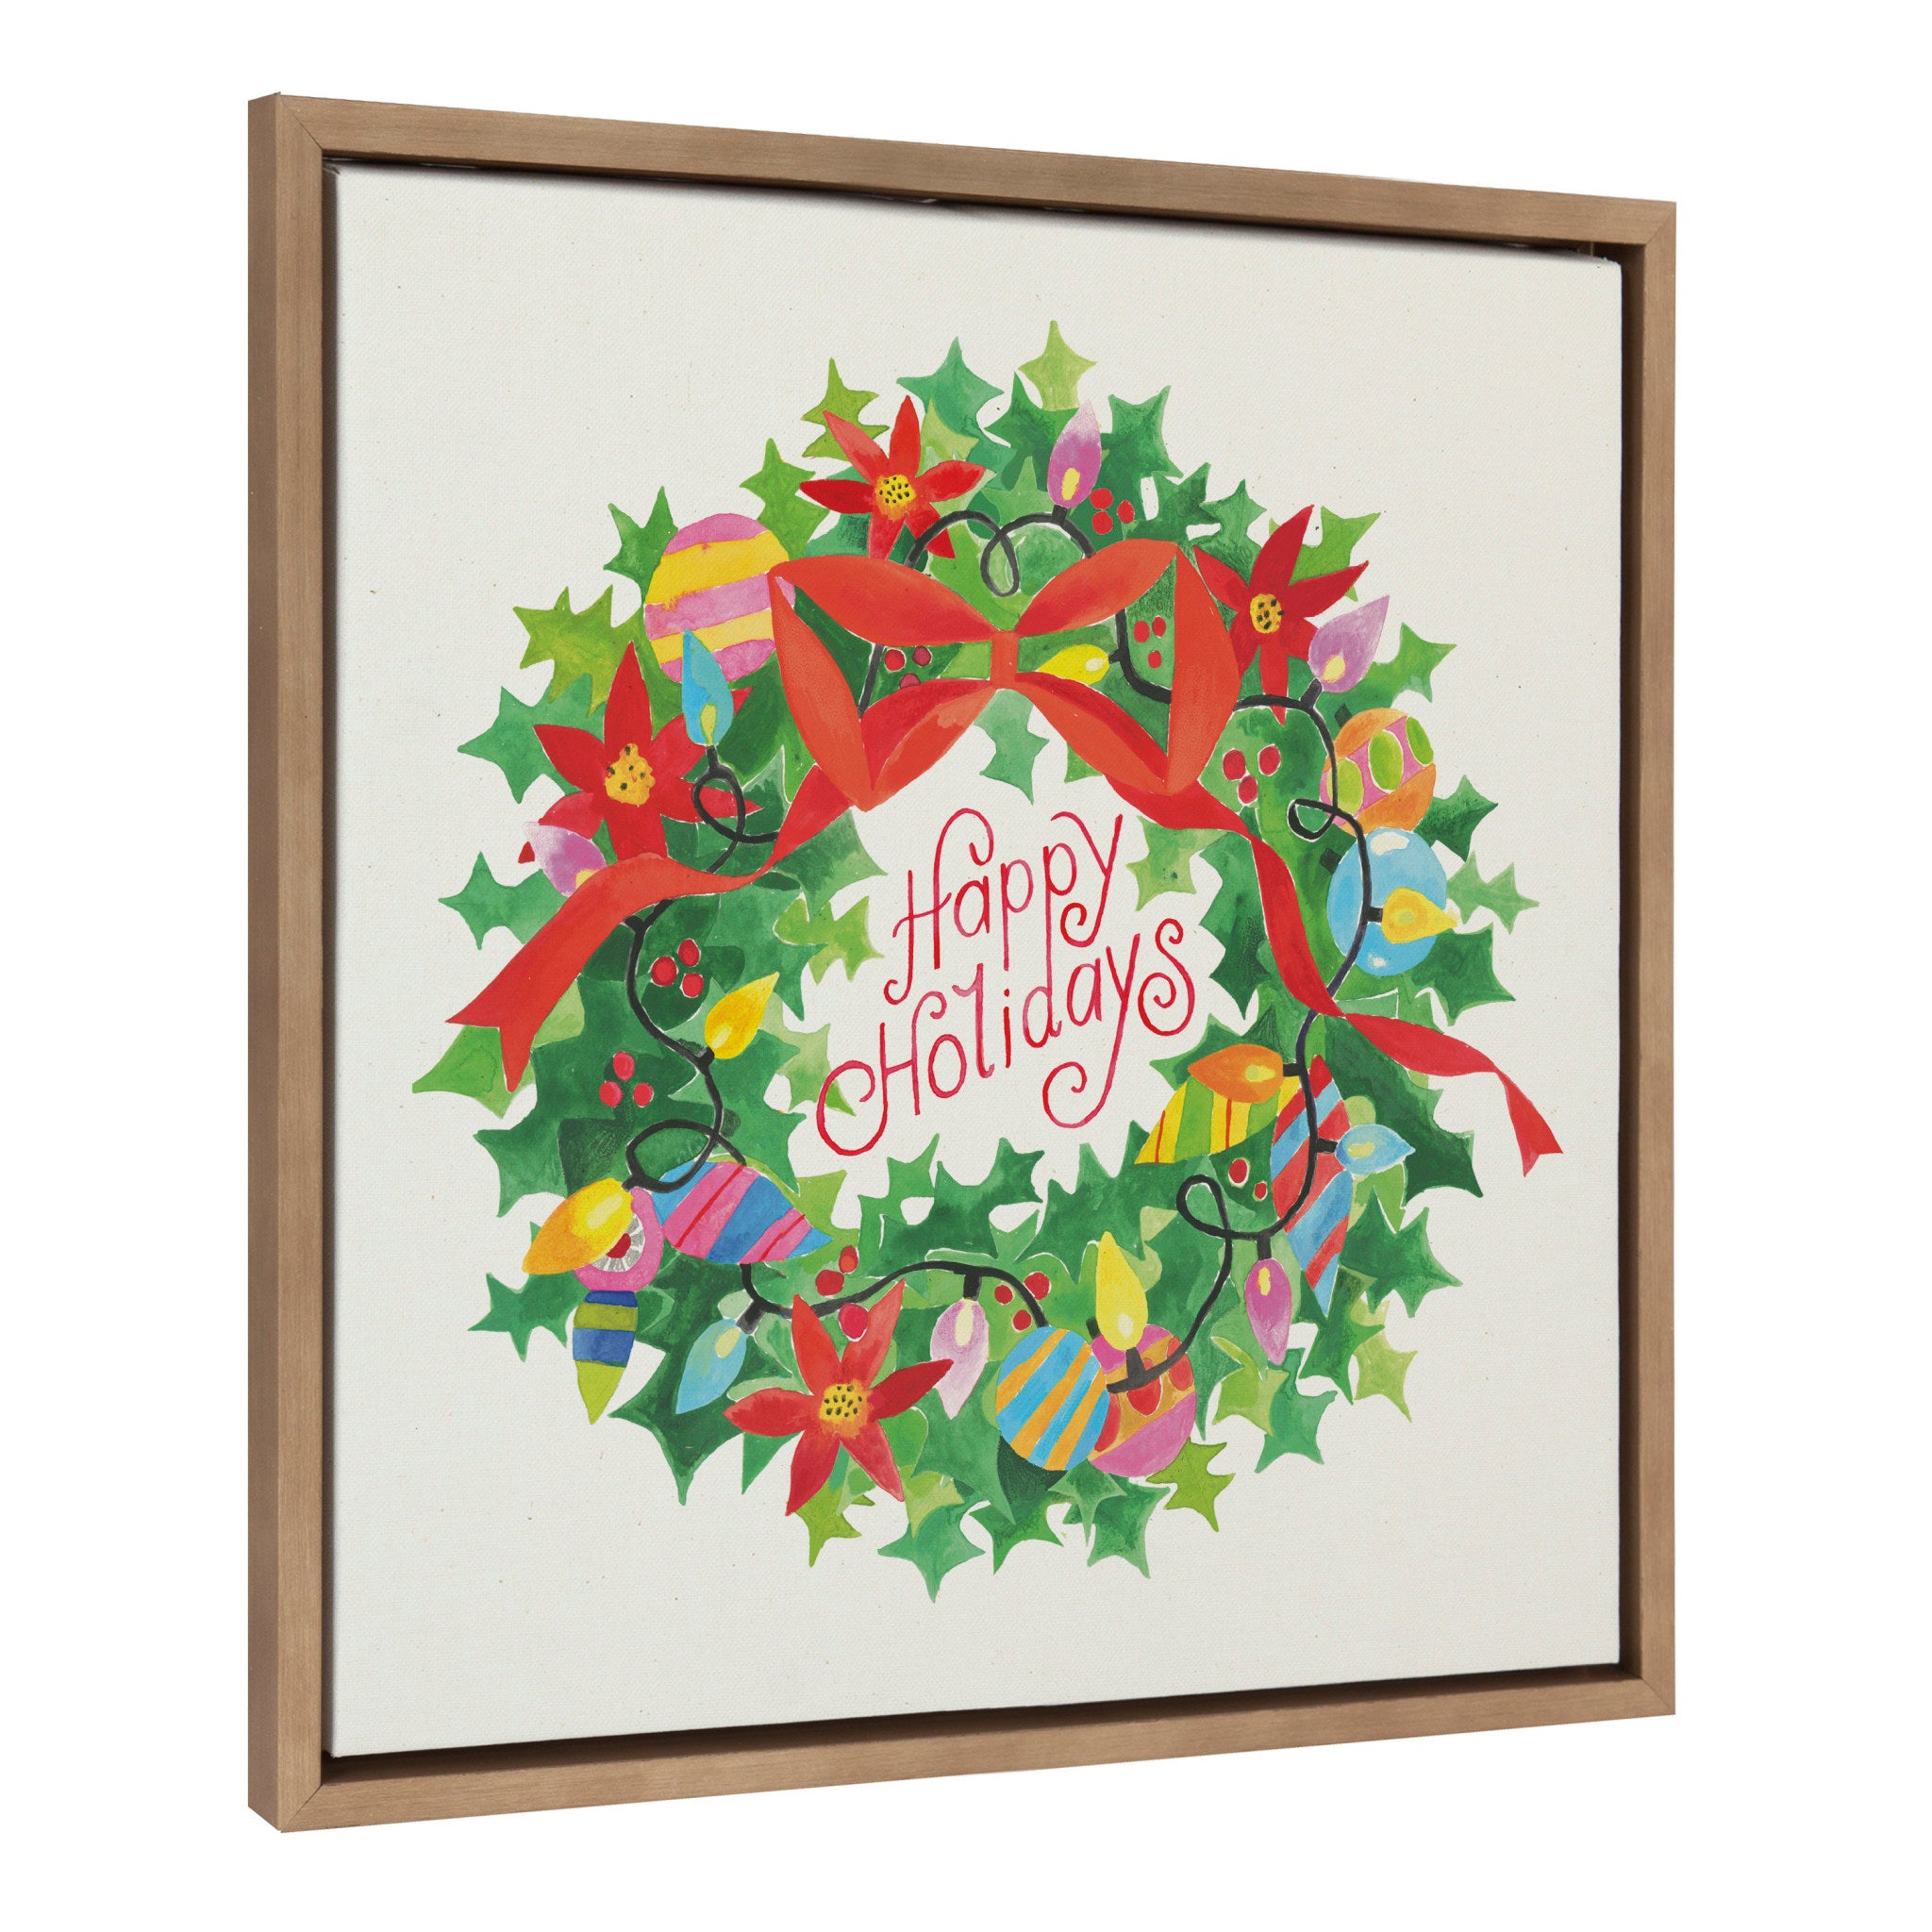 Sylvie Xmas Wreath Happy Holidays Framed Canvas by Shannon Snow, Gold 22x22